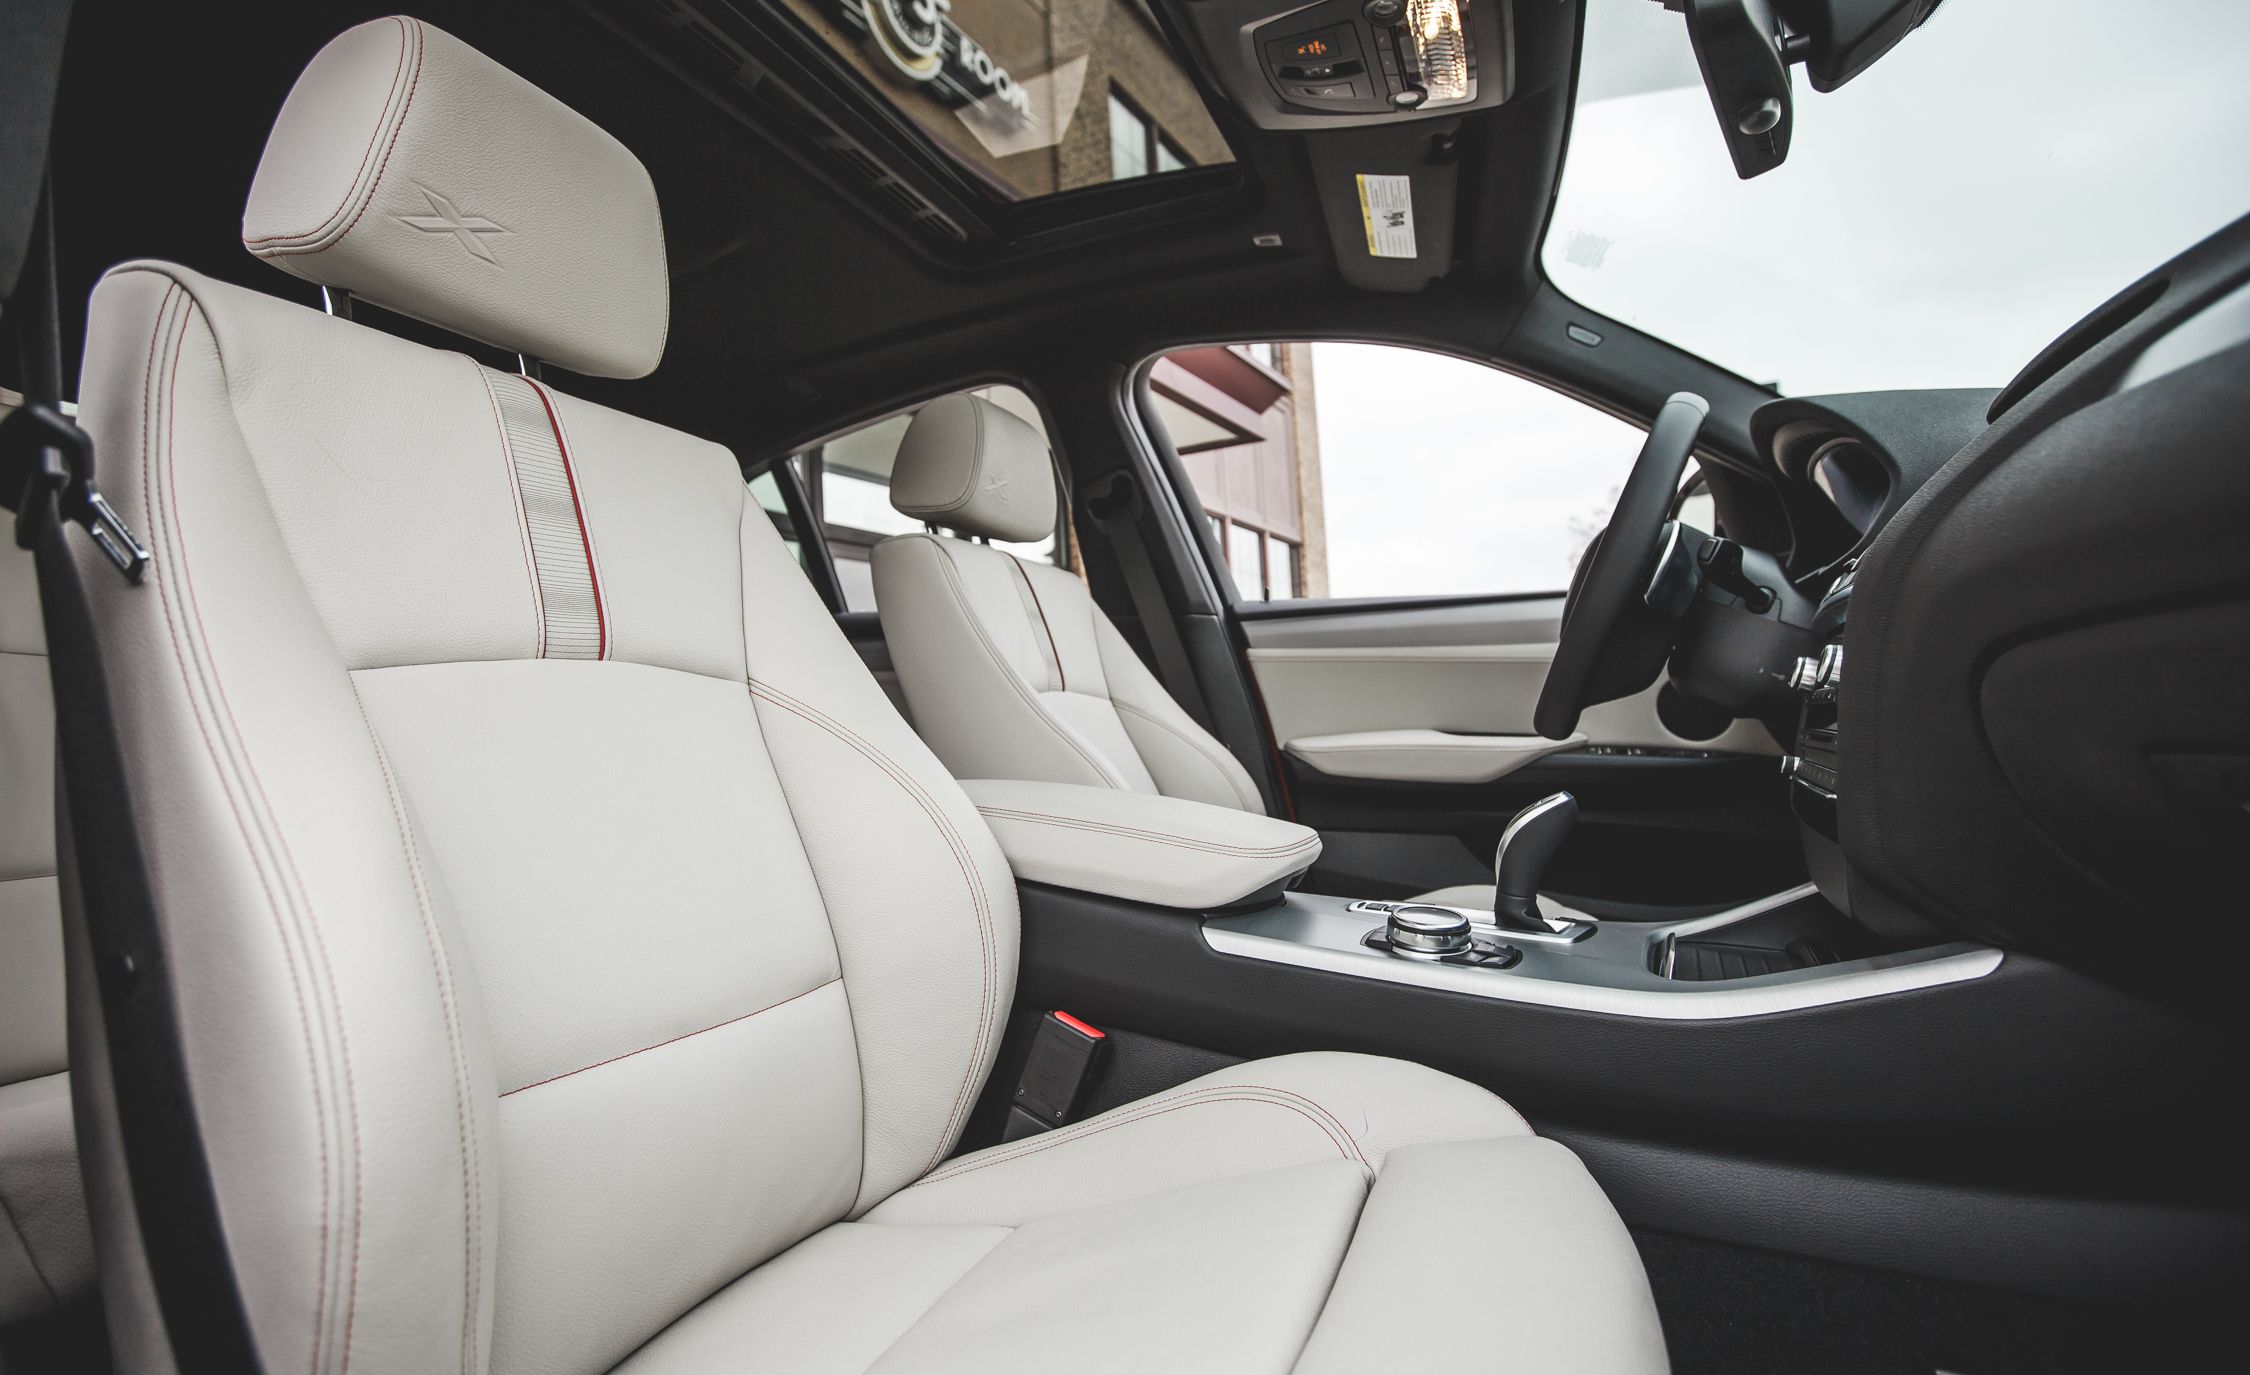 2015 BMW X4 XDrive28i Interior (View 7 of 29)